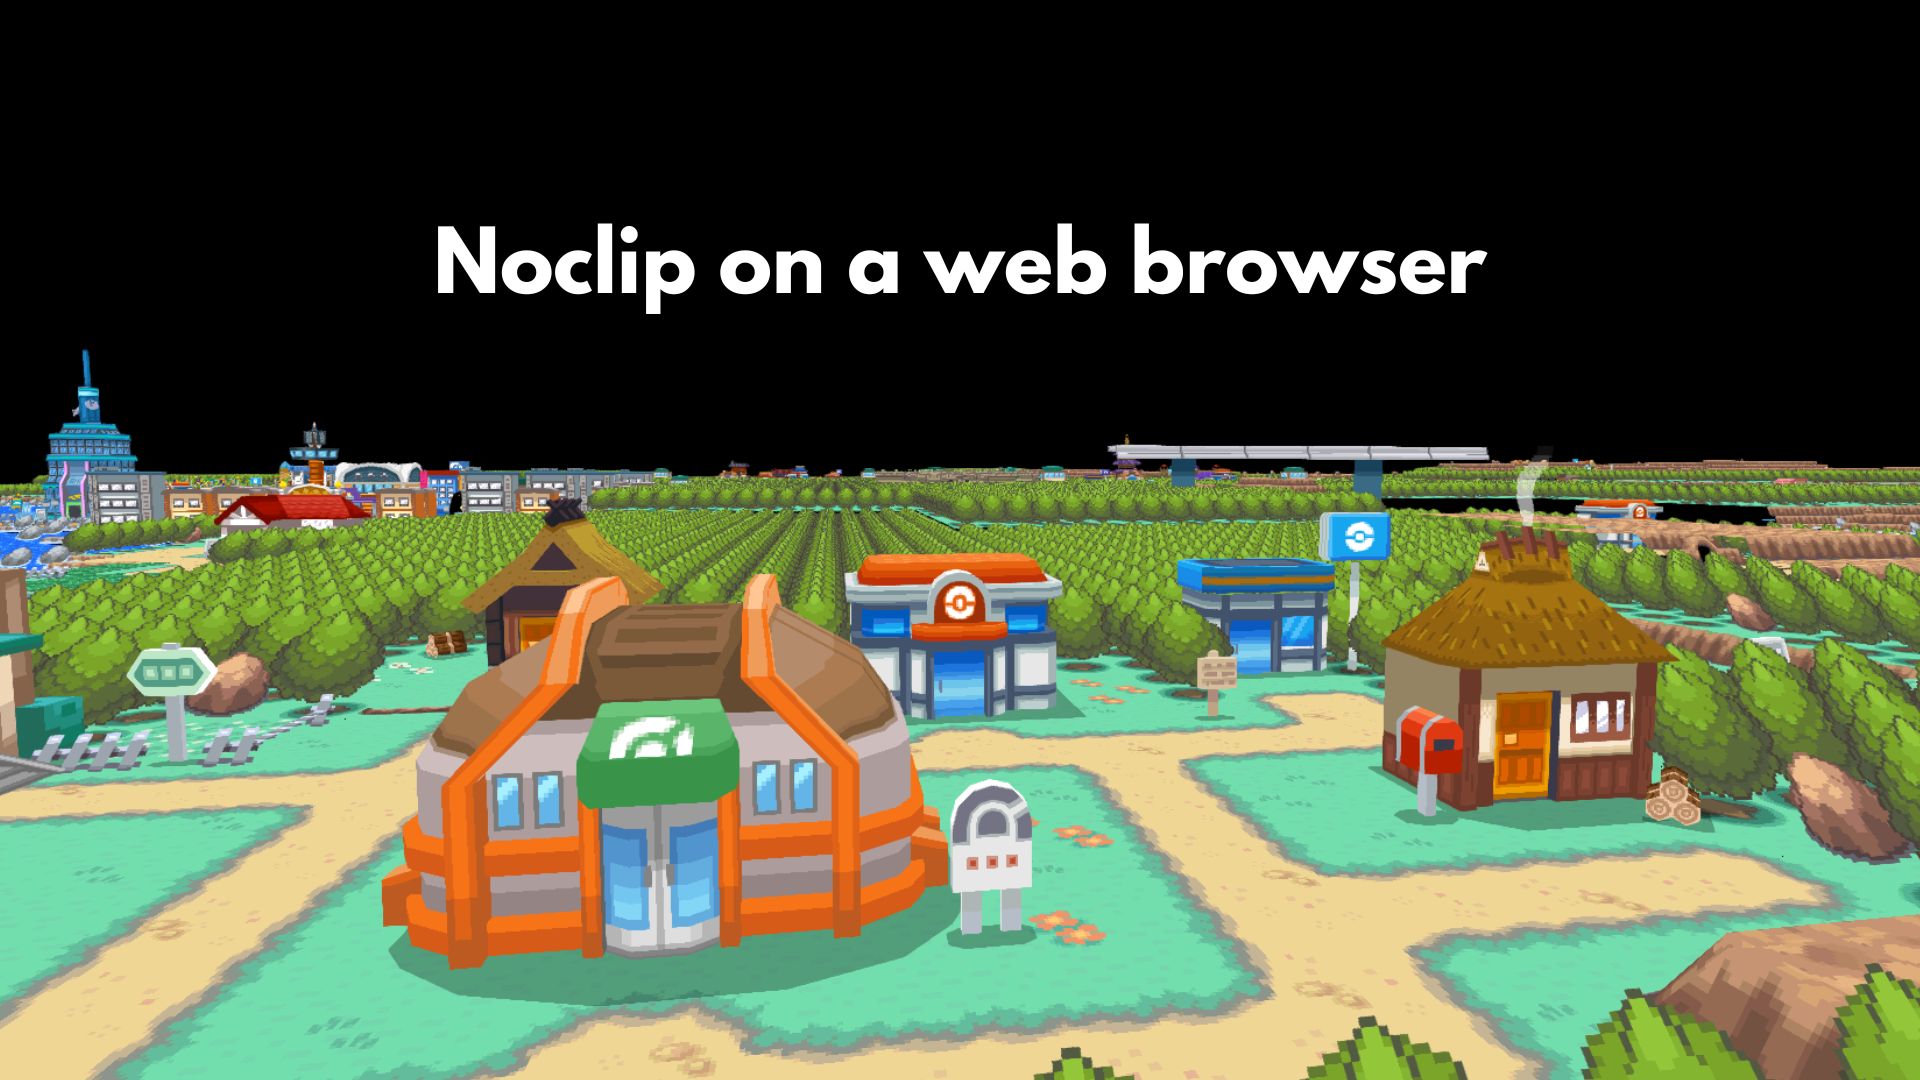 Noclip on a web browser